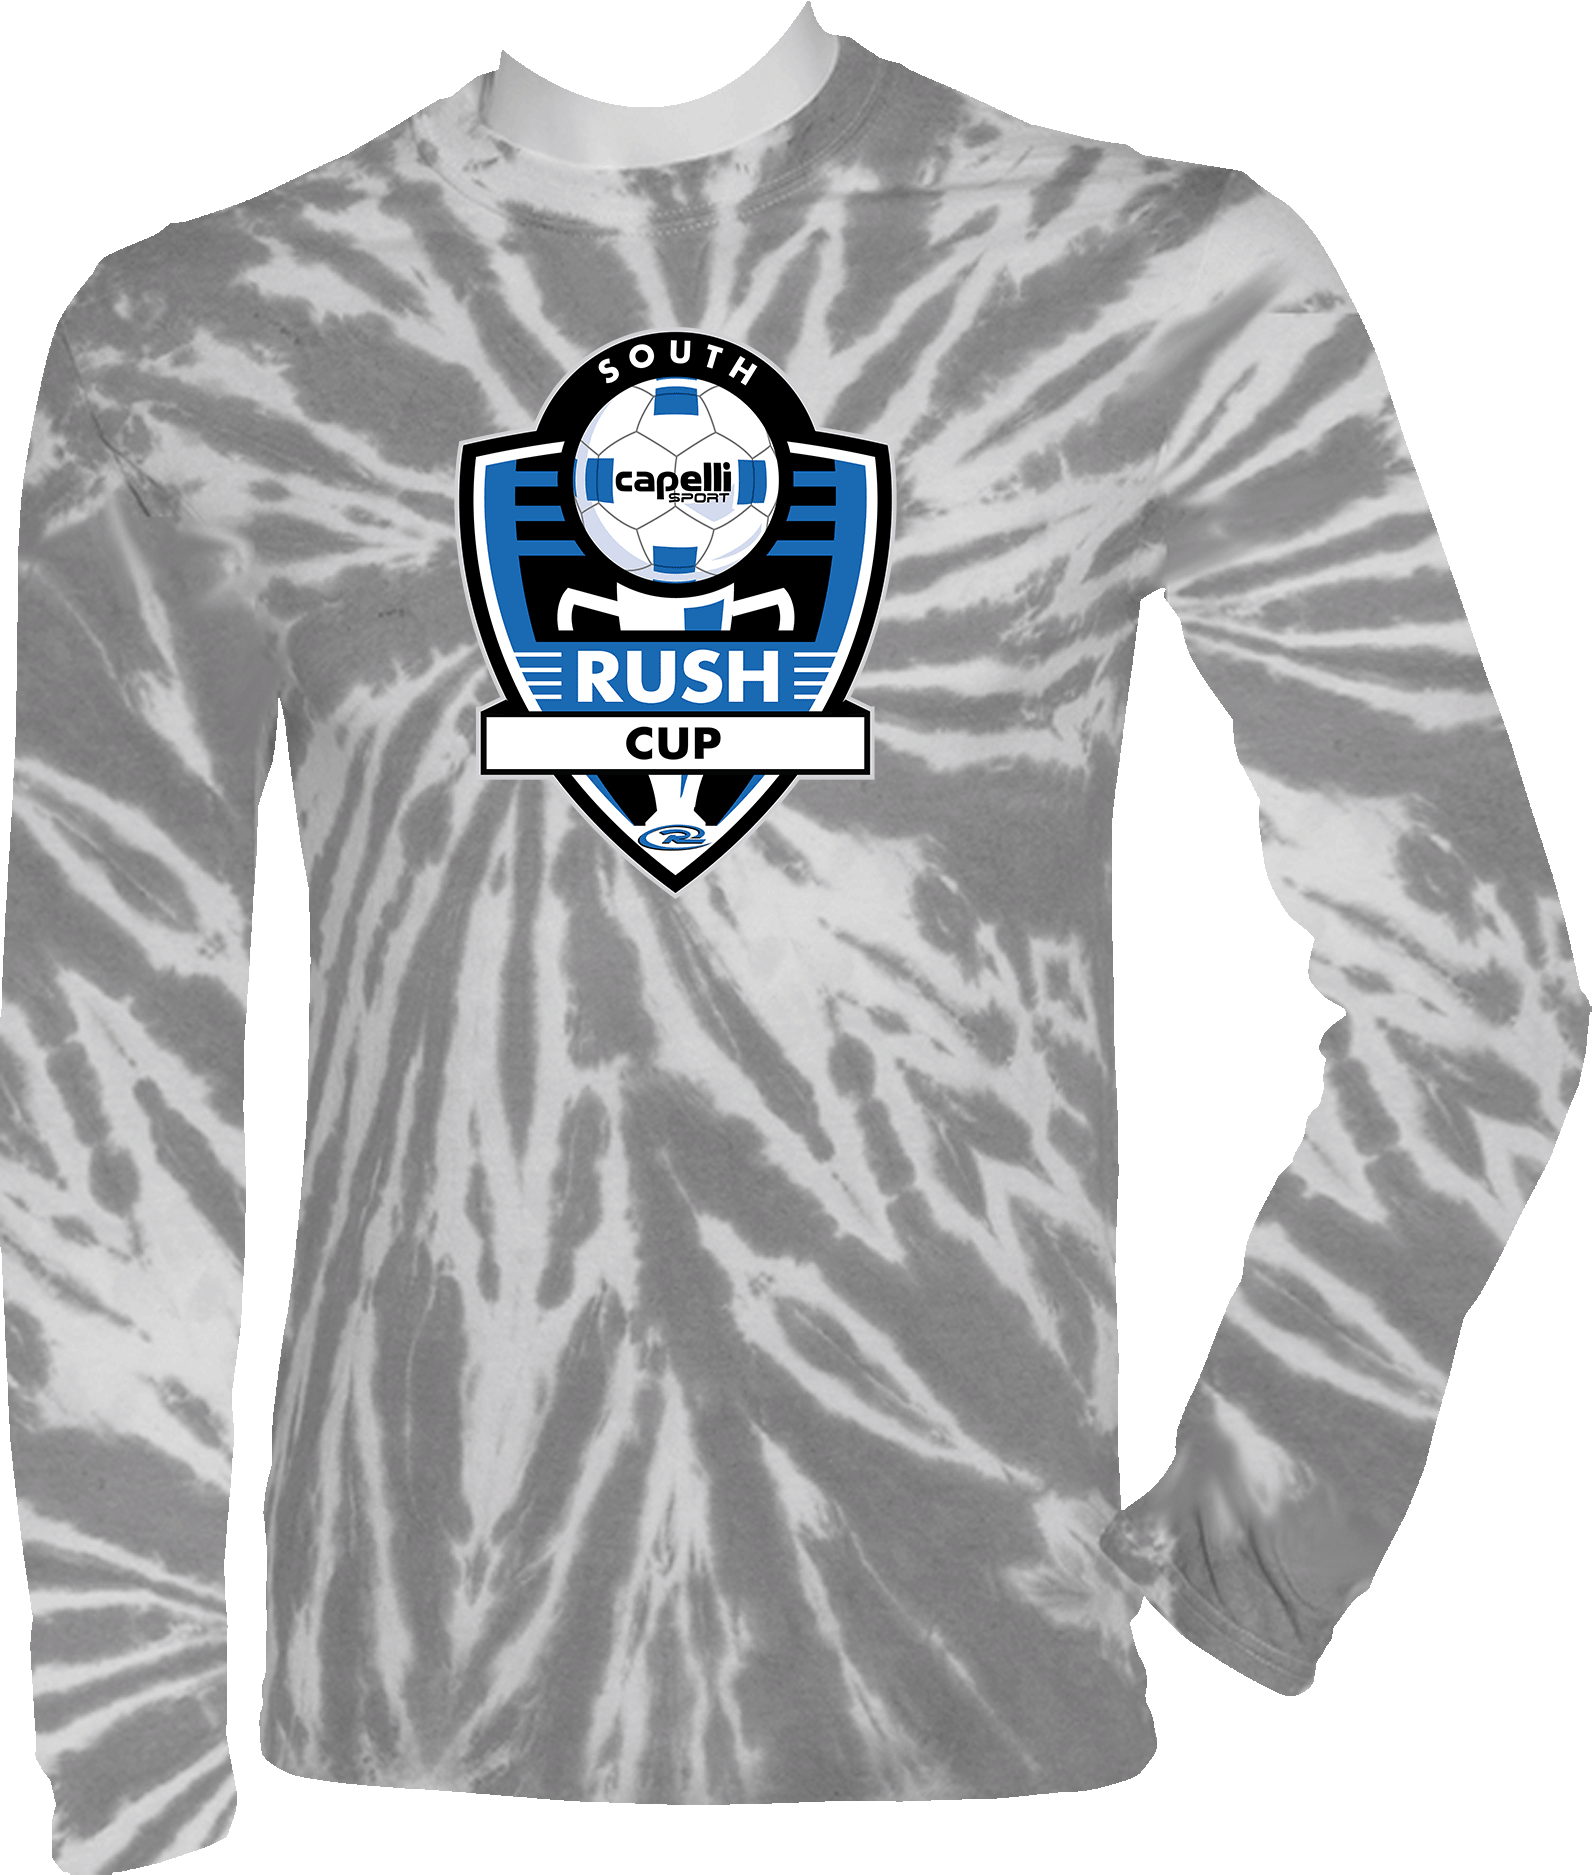 Tie-Dye Long Sleeves - 2024 South Rush Cup